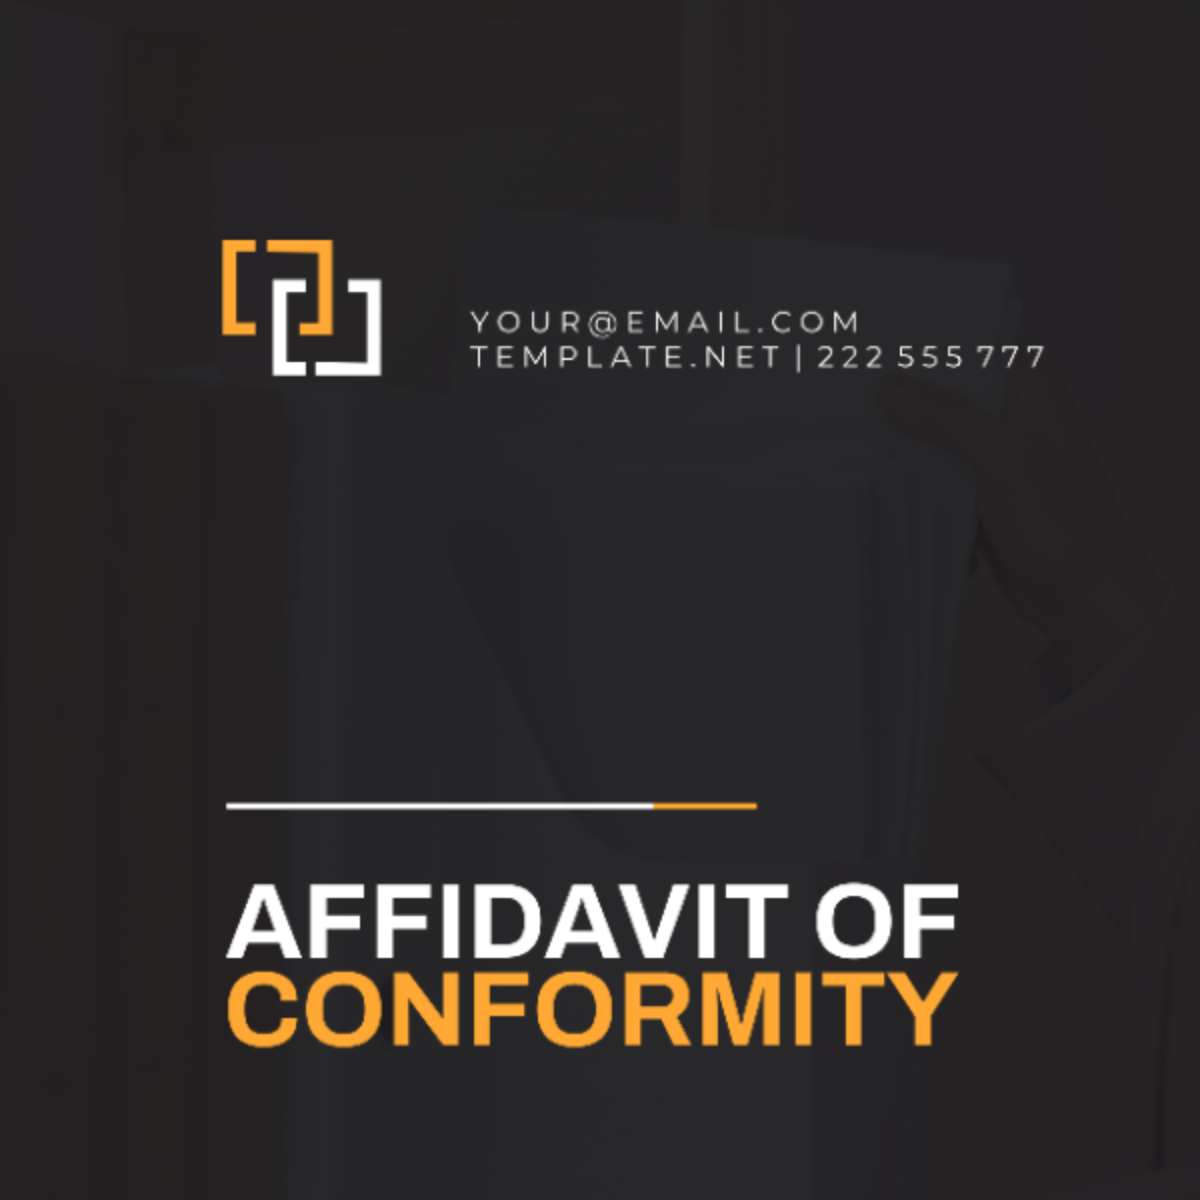 Affidavit of Conformity Template